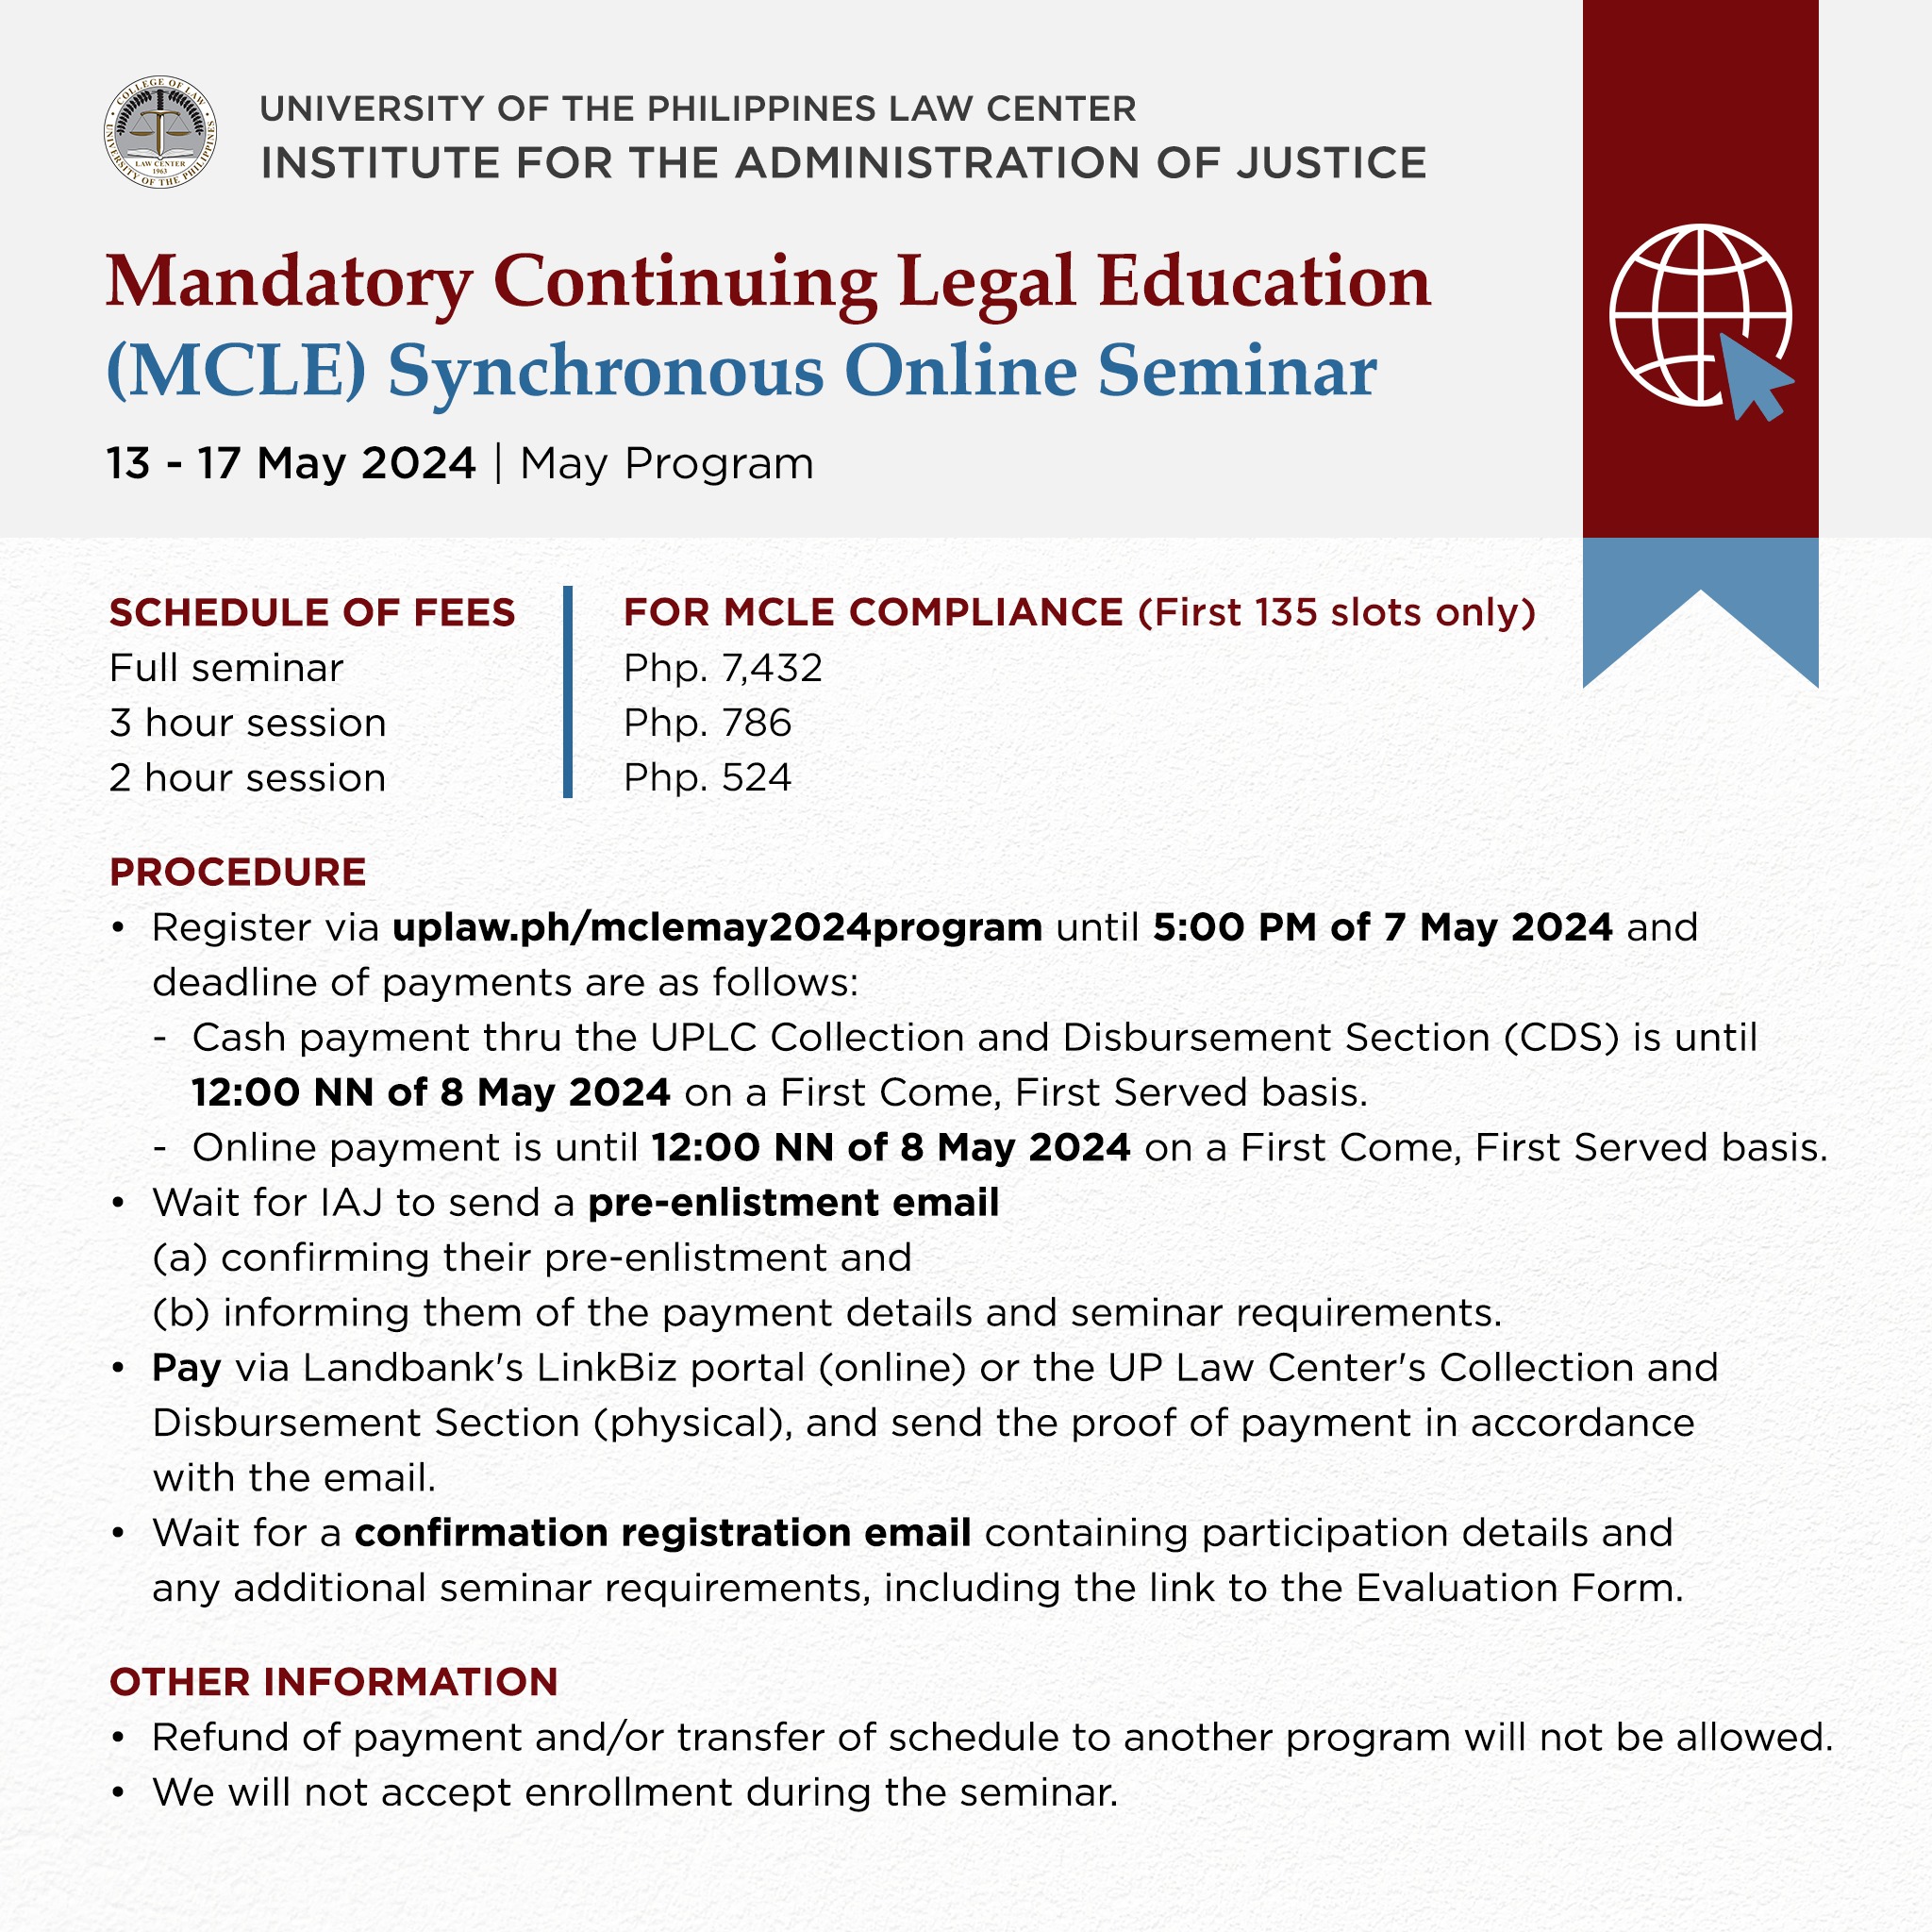 Mandatory Continuing Legal Education Synchronous Online Seminar